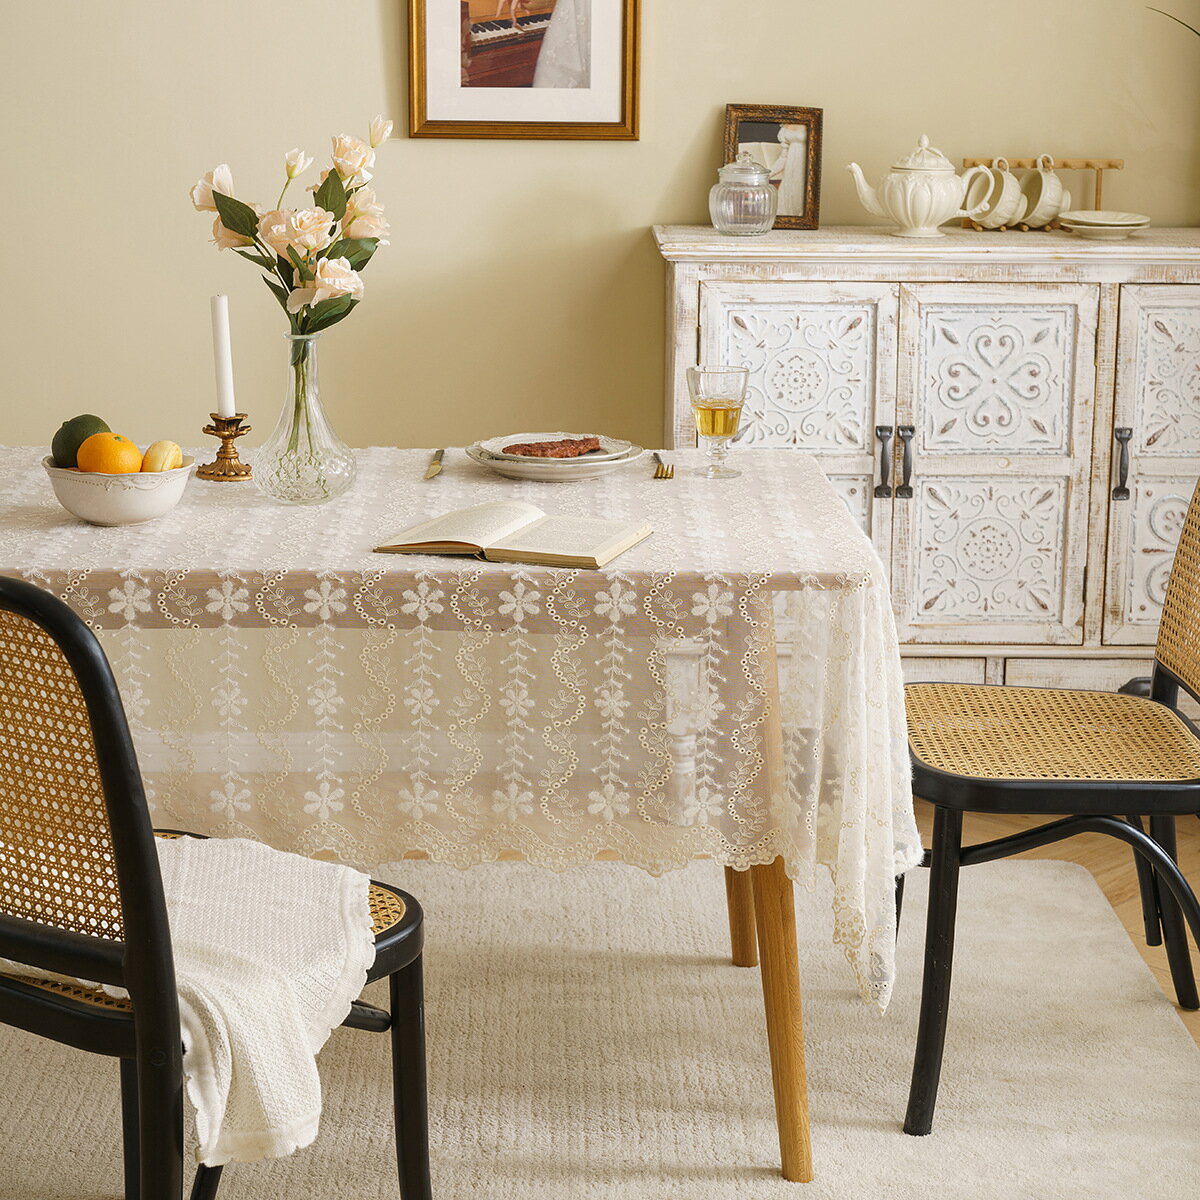 ins風棉麻桌布鏤空蕾絲裝飾布藝長方形茶幾布餐桌布蓋布